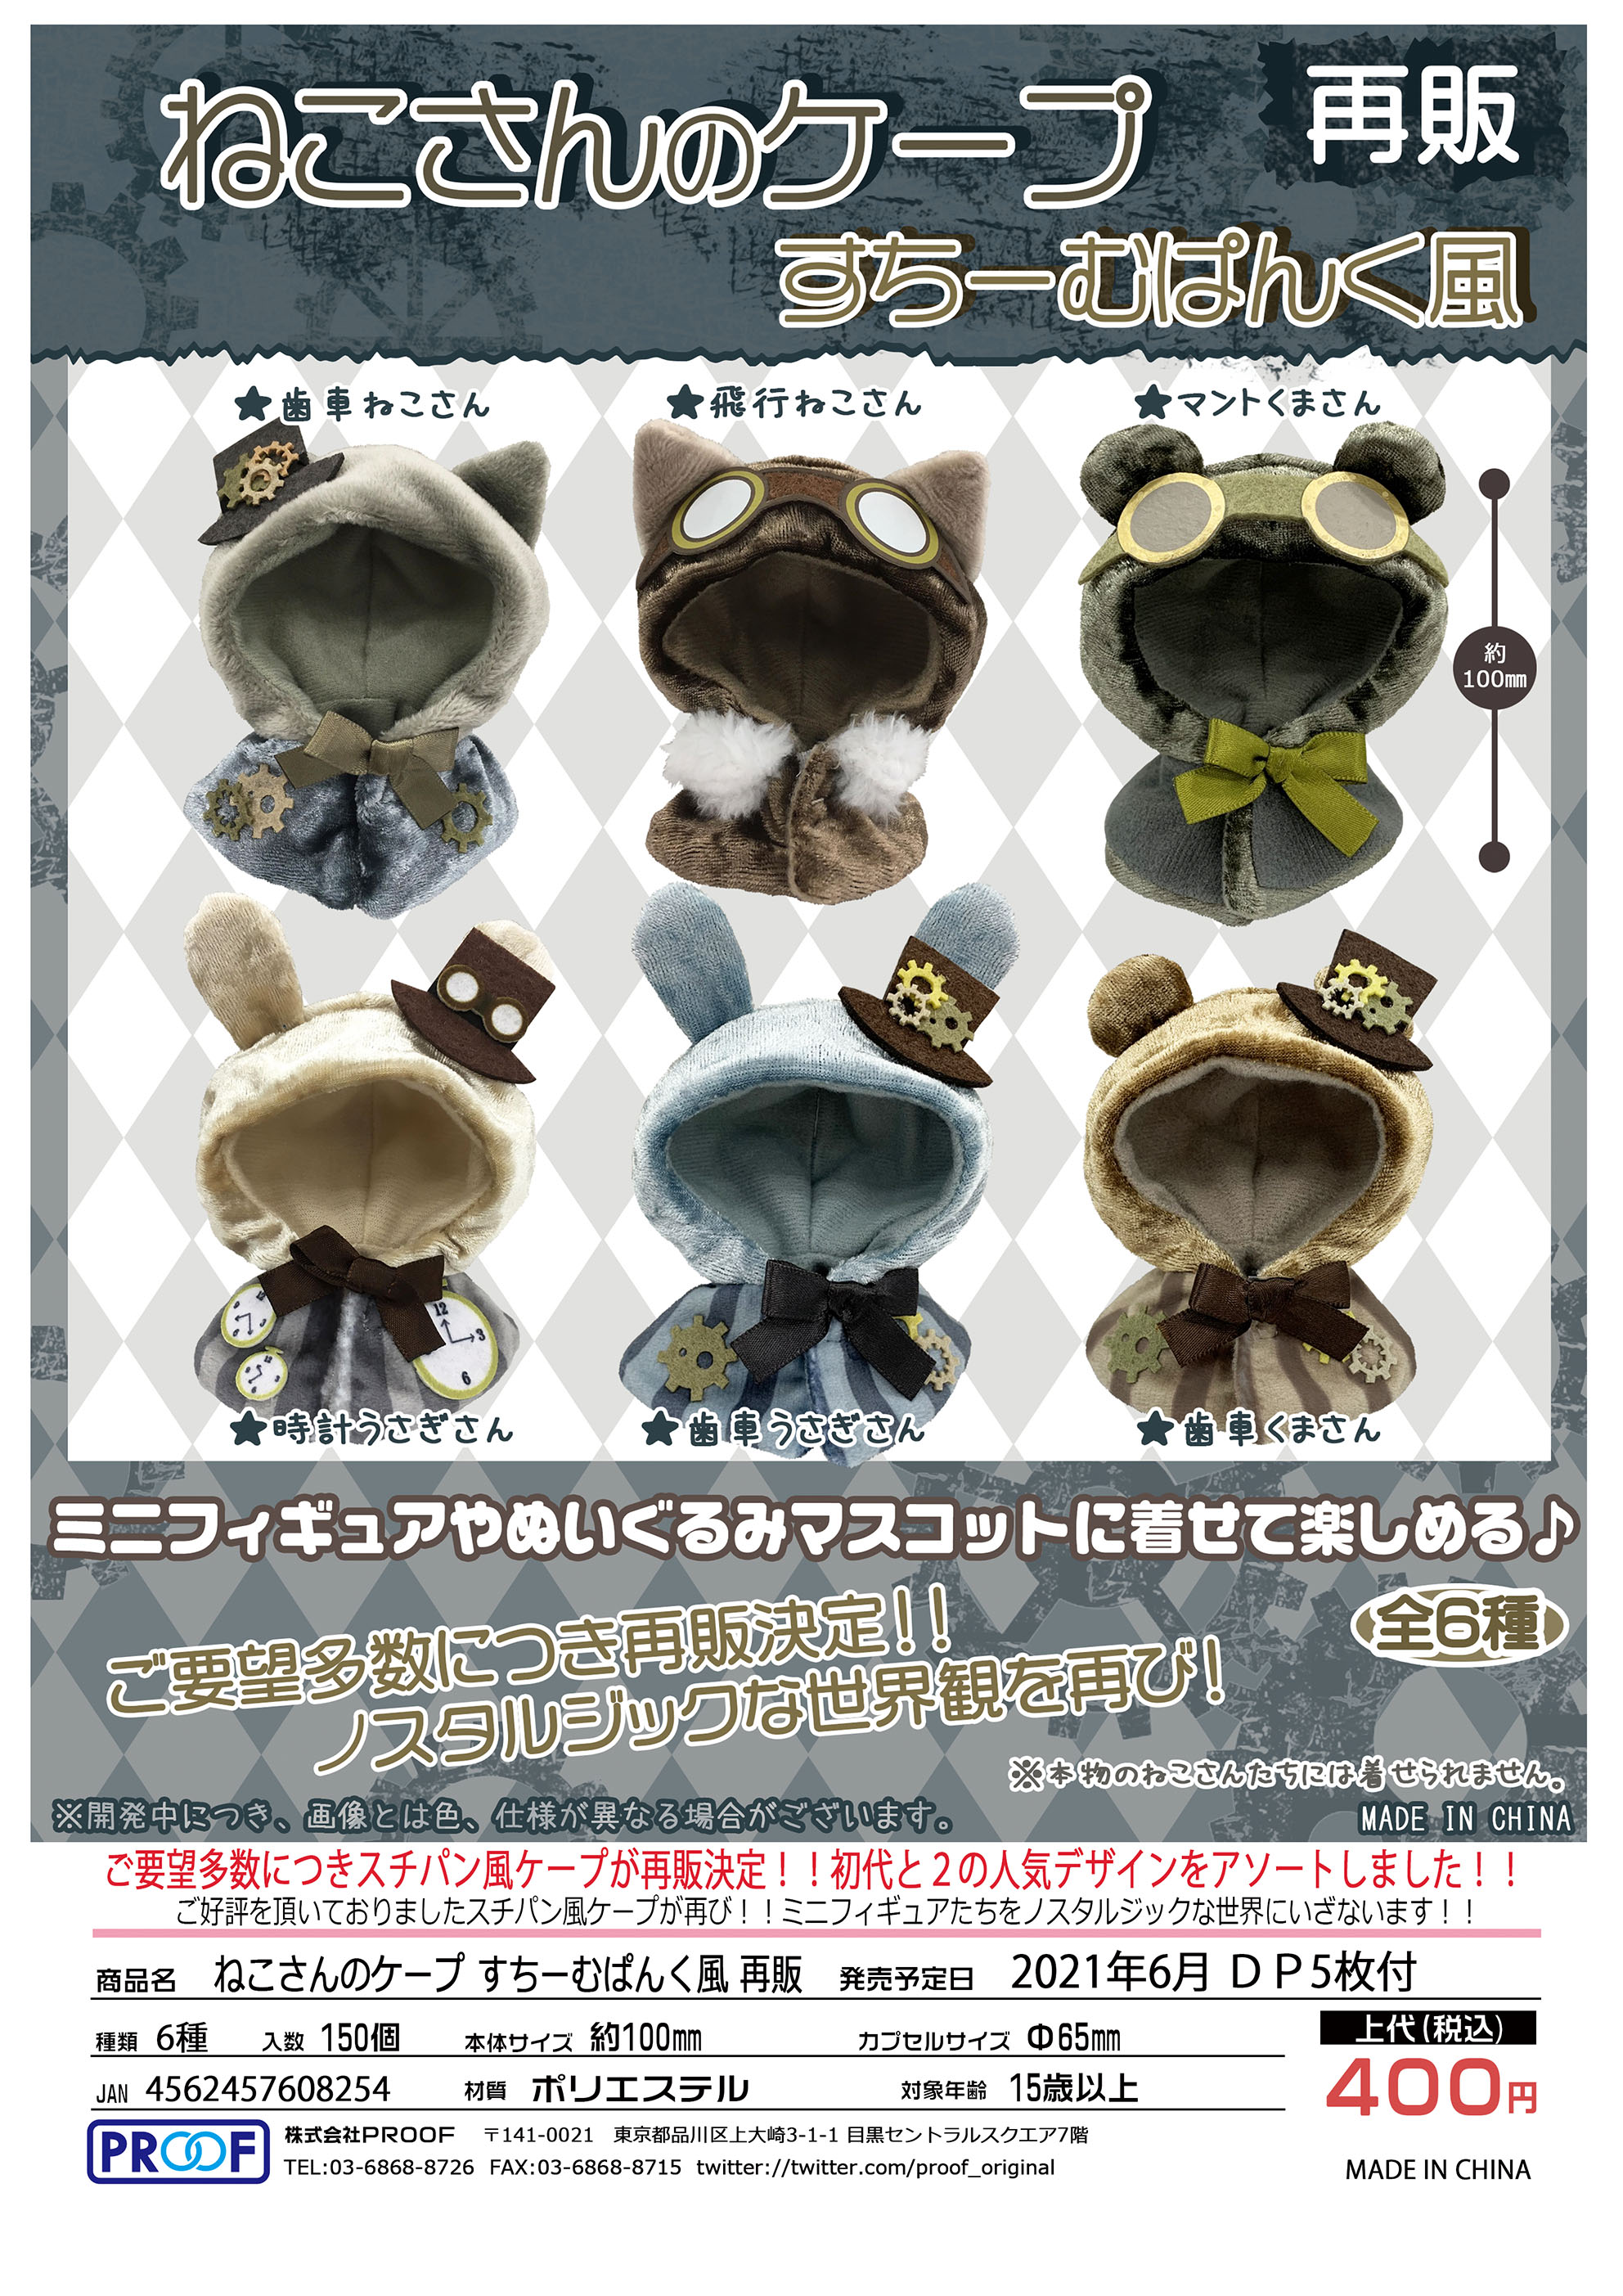 【A】400日元扭蛋 粘土人外套 蒸汽朋克风披风 第2弹 全6种 (1袋30个) 608254